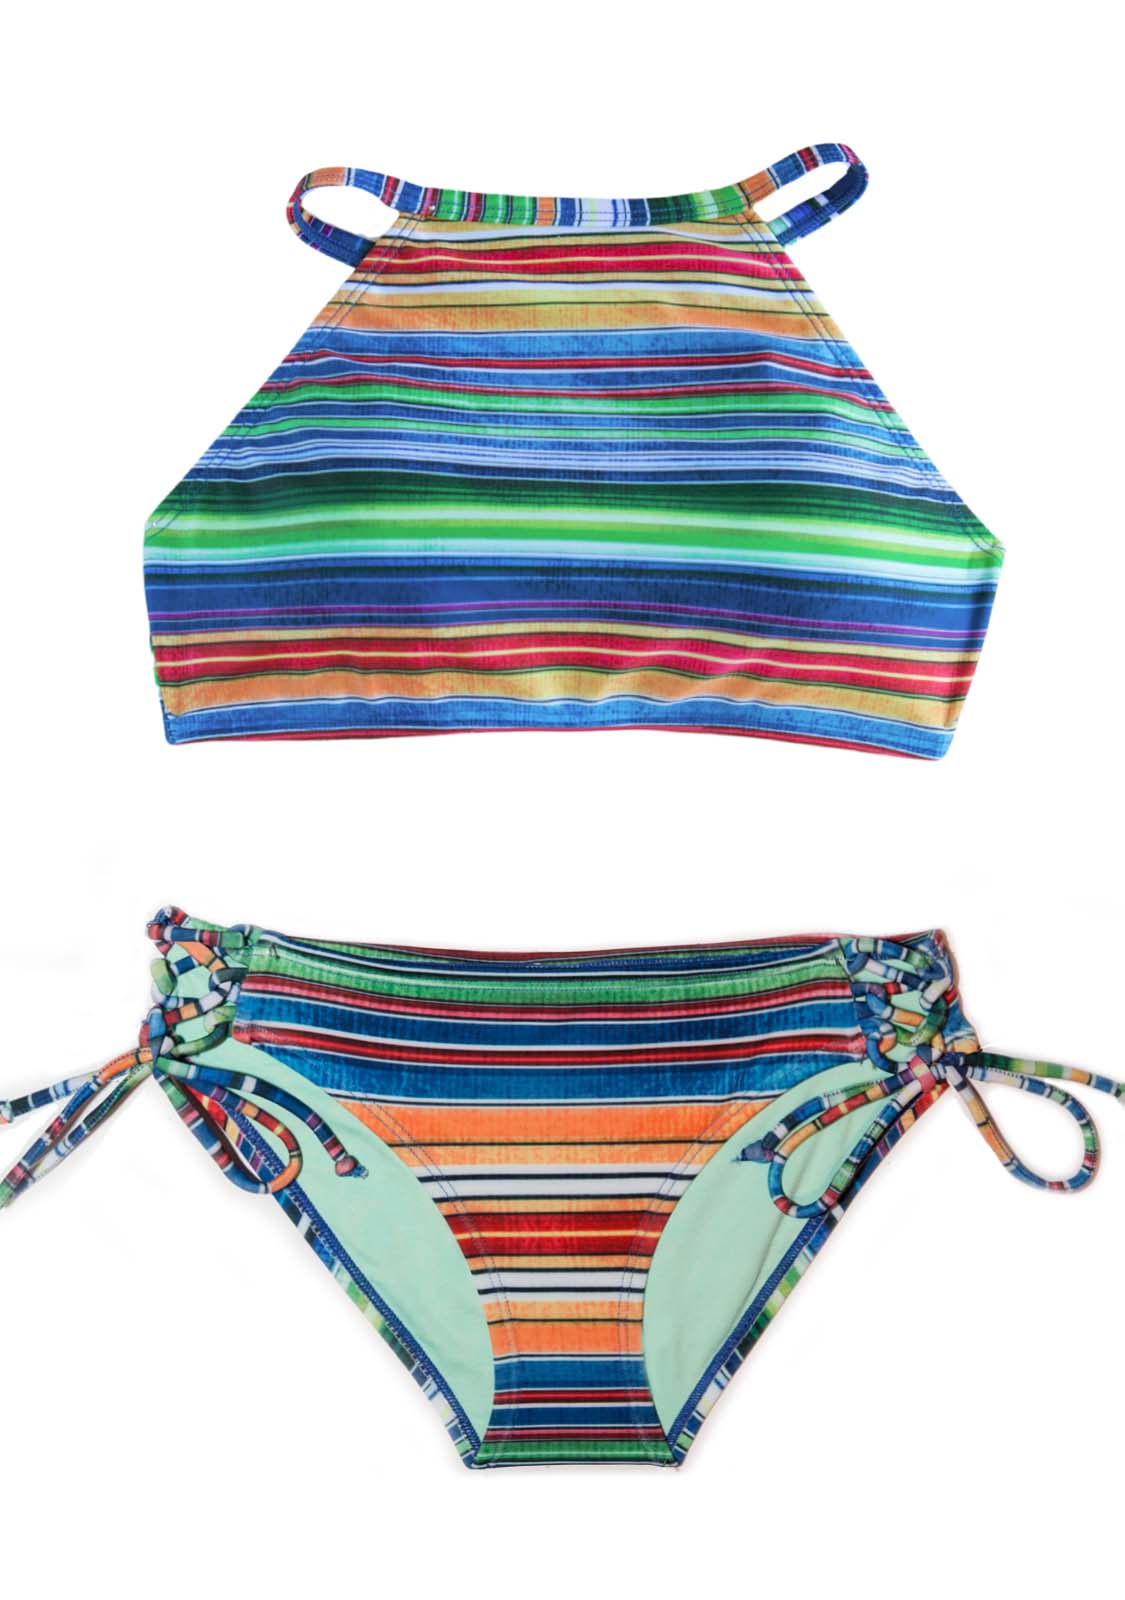 Womens Teens Swimsuit SIZE M/L, BLUE, Stripes Print Strappy Tankini 2 Piece